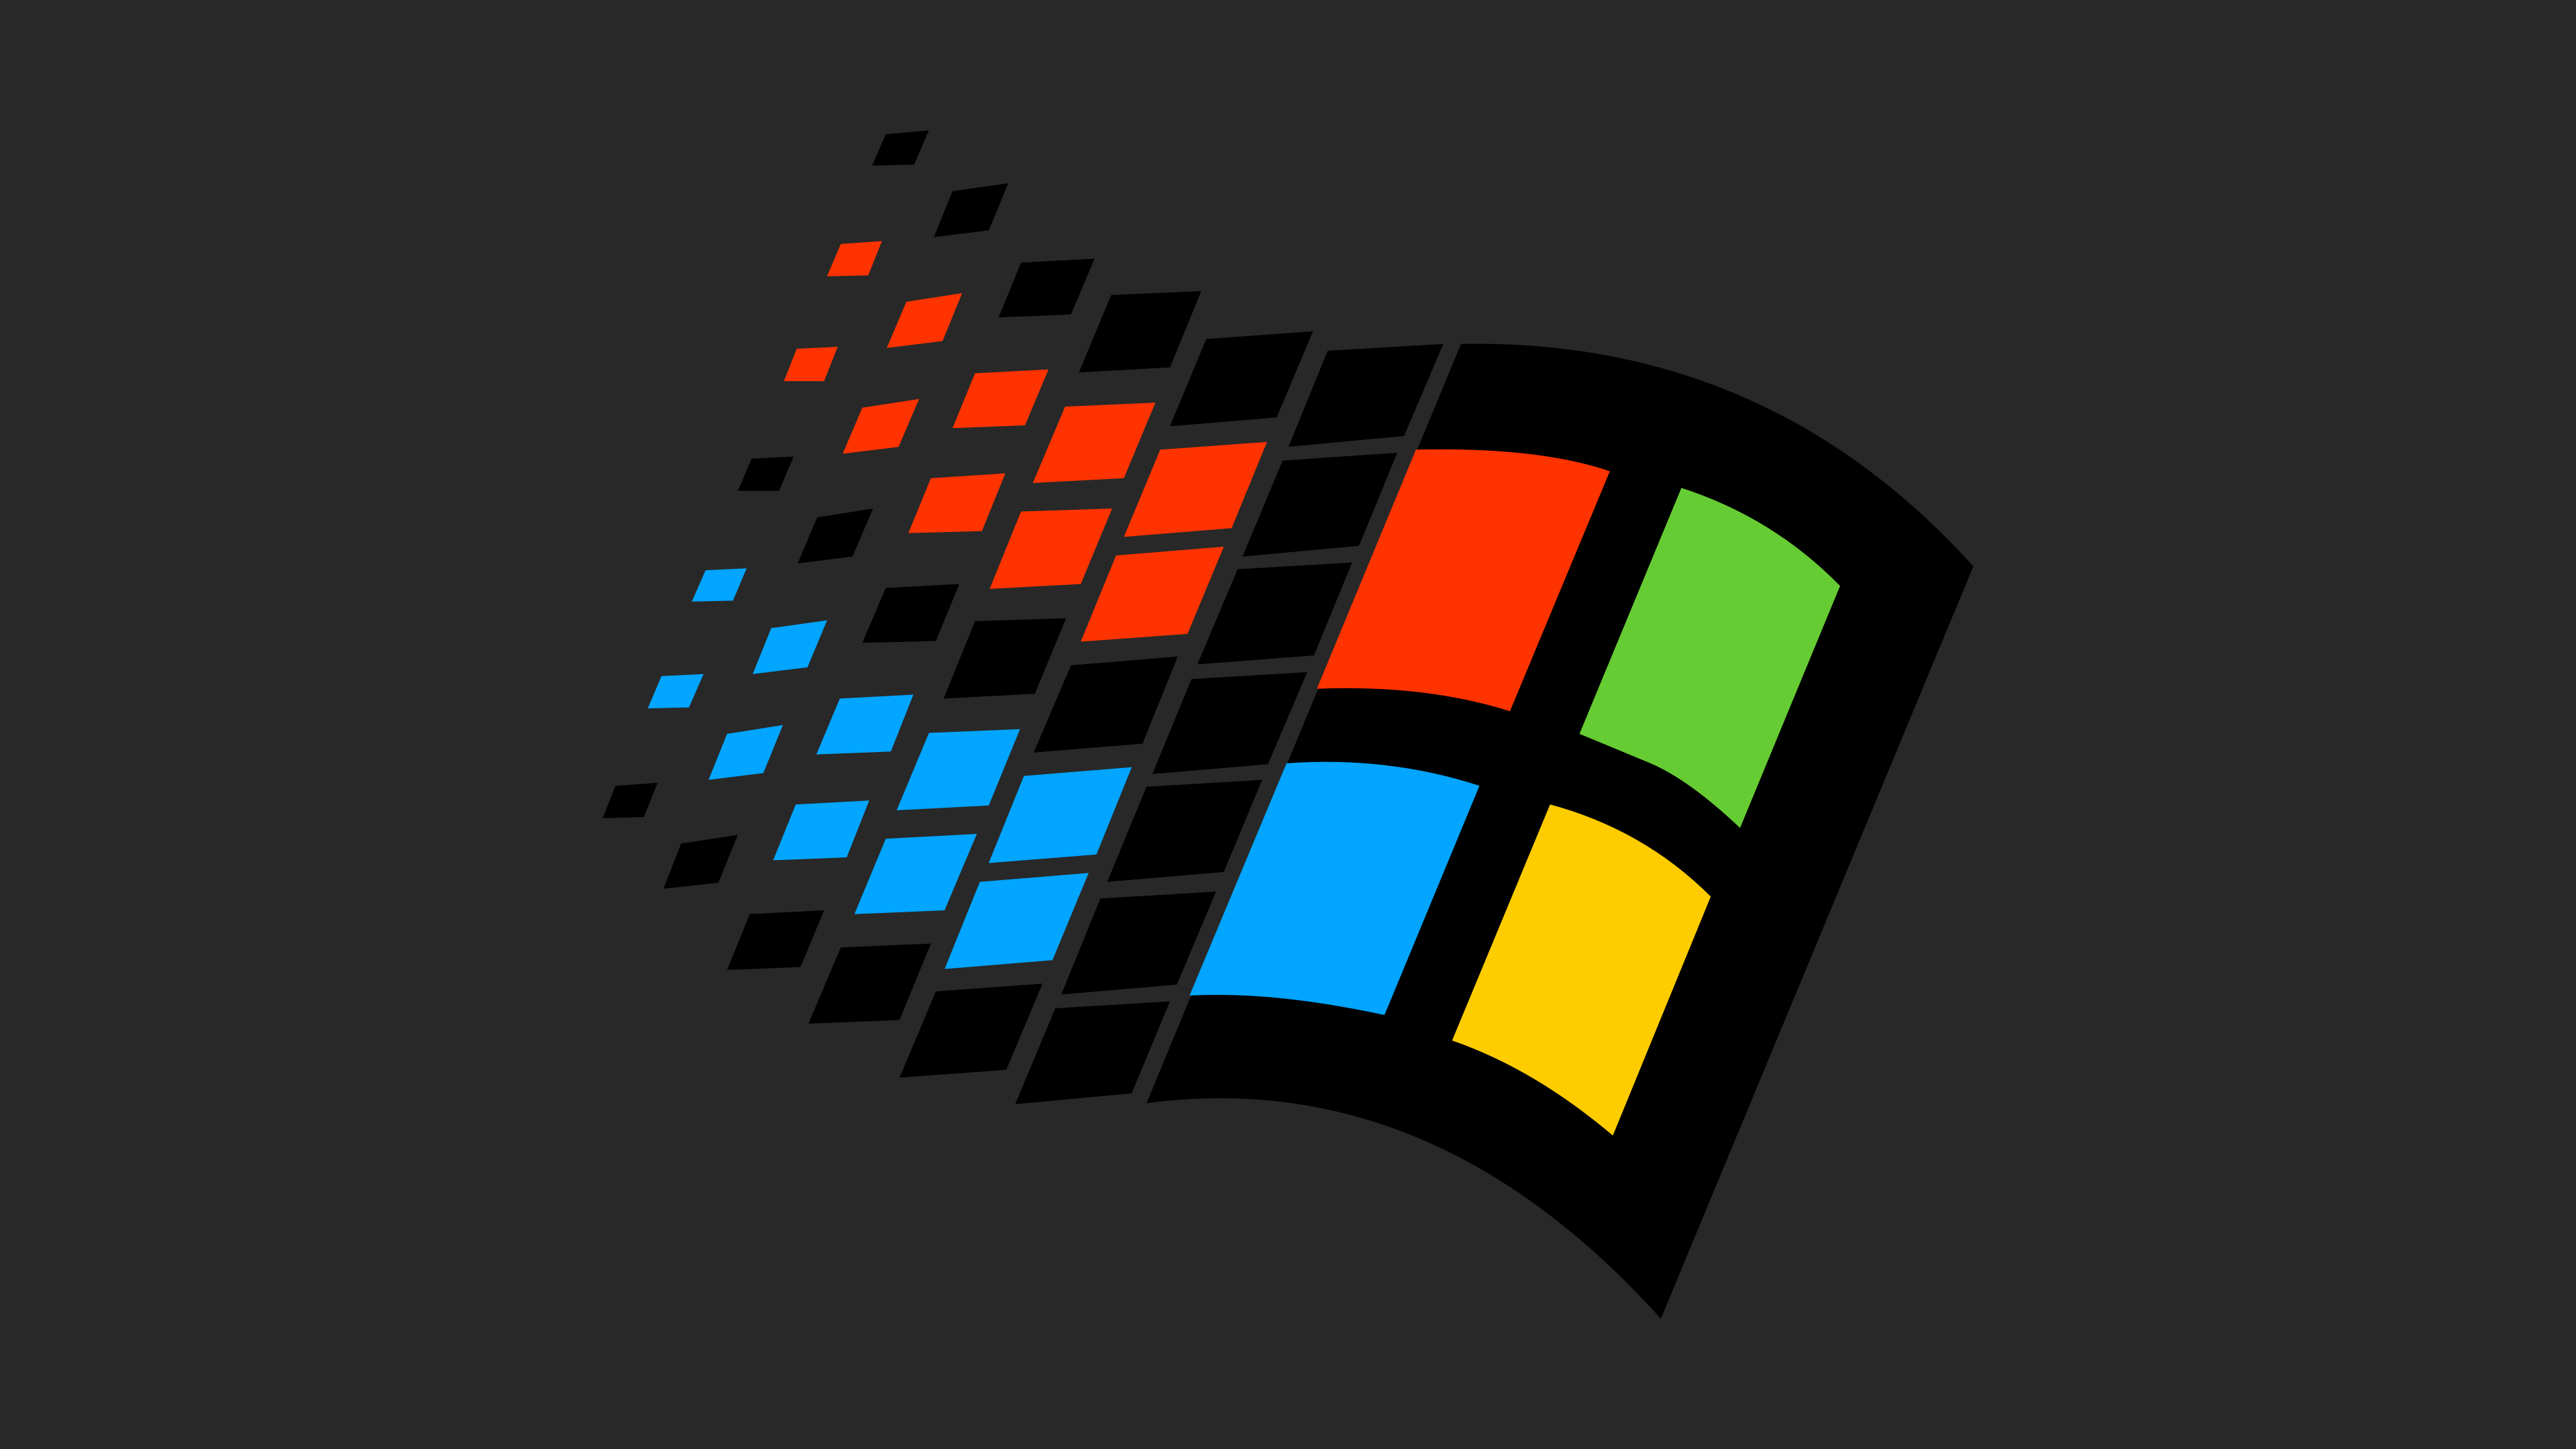 Wallpaper Windows, Windows nt Workstation, Windows nt 4 0, Windows NT, Microsoft  Windows, Background - Download Free Image